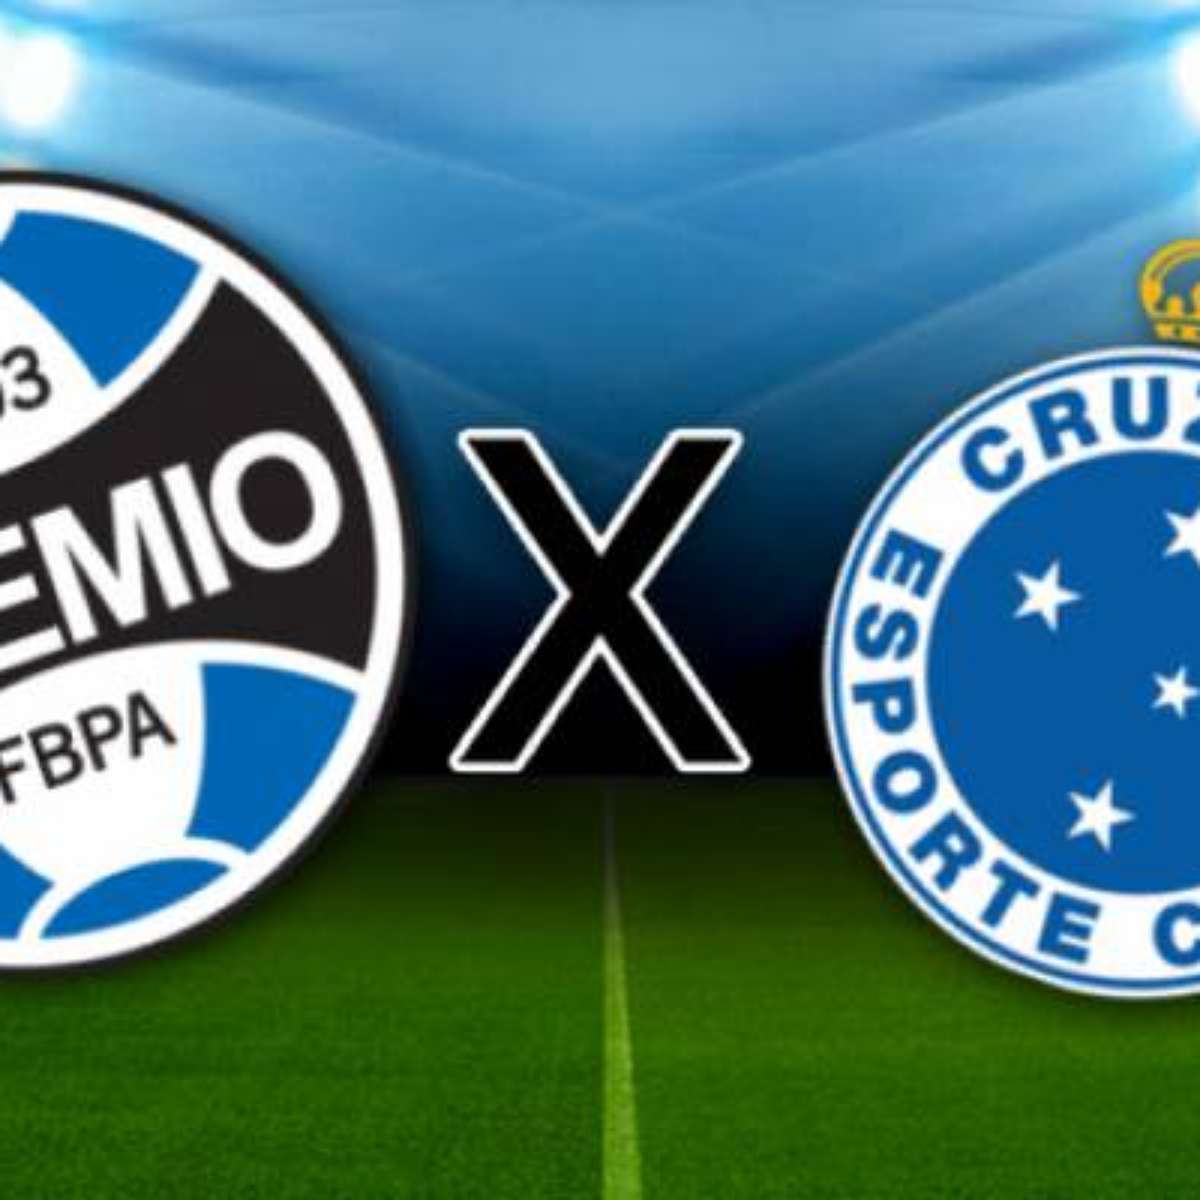 Cruzeiro vs America MG: A Fierce Rivalry